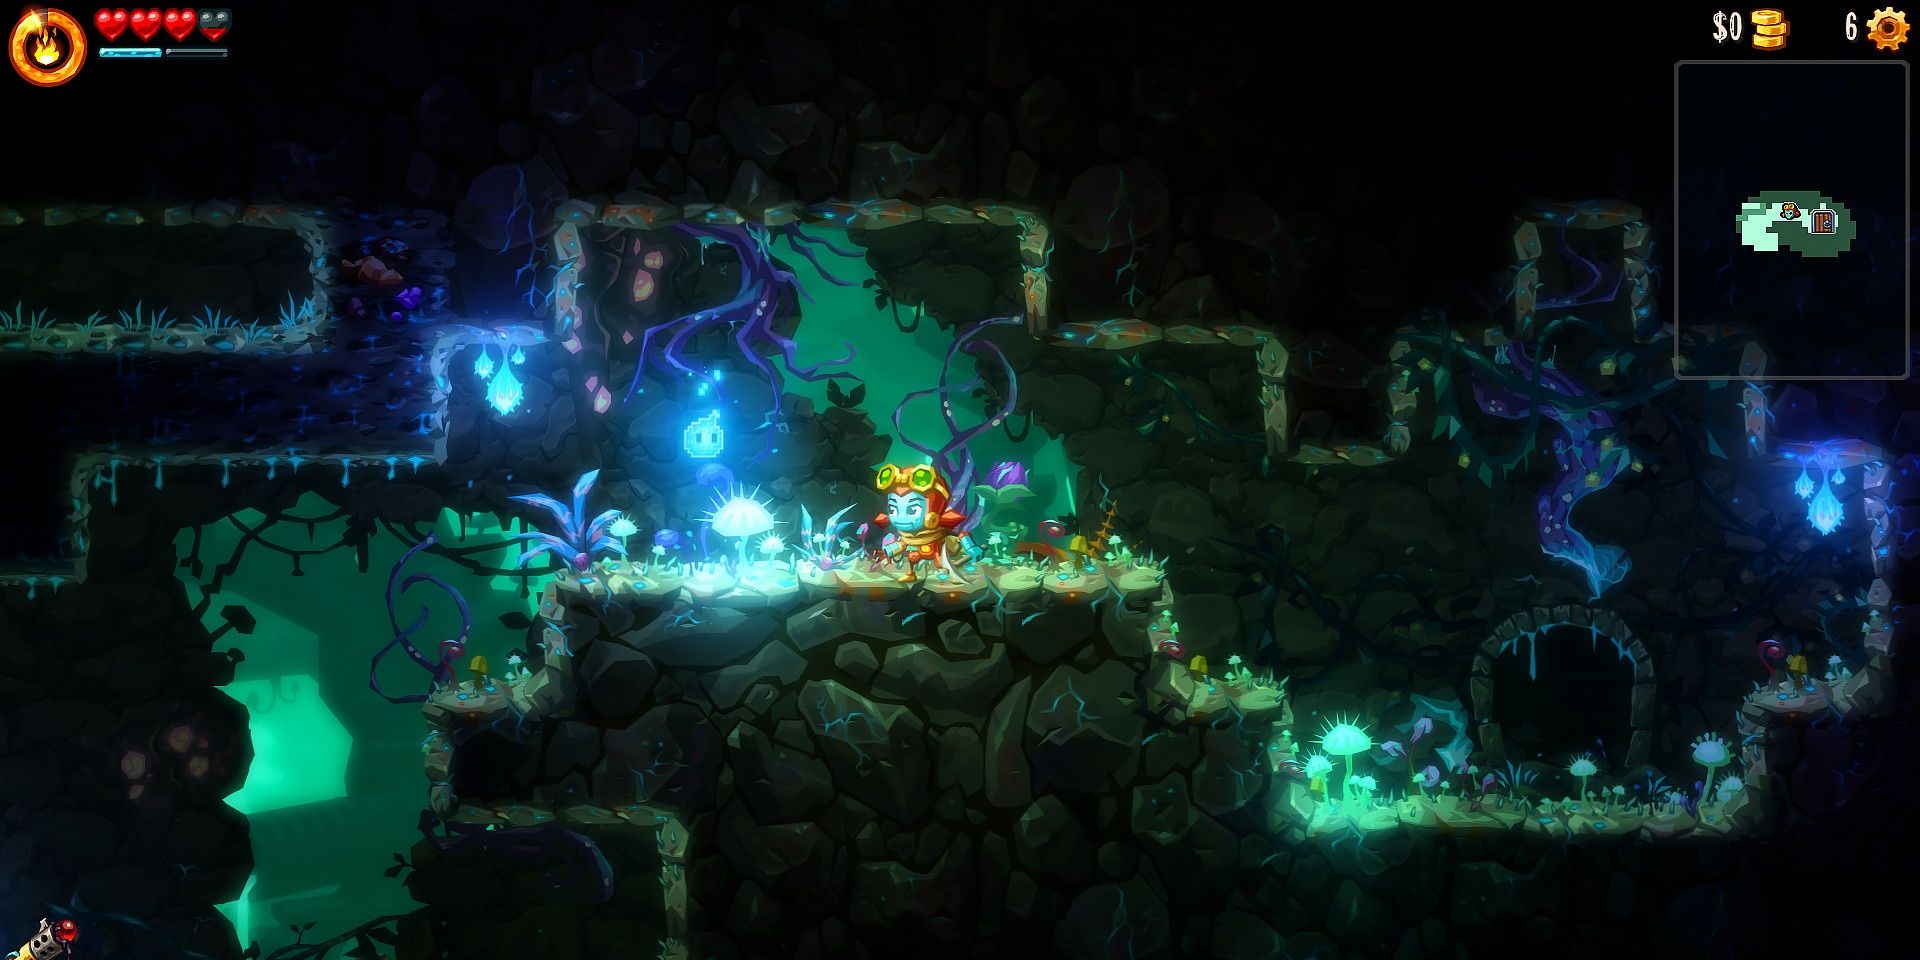 A screenshot showing gameplay in SteamWorld Dig 2